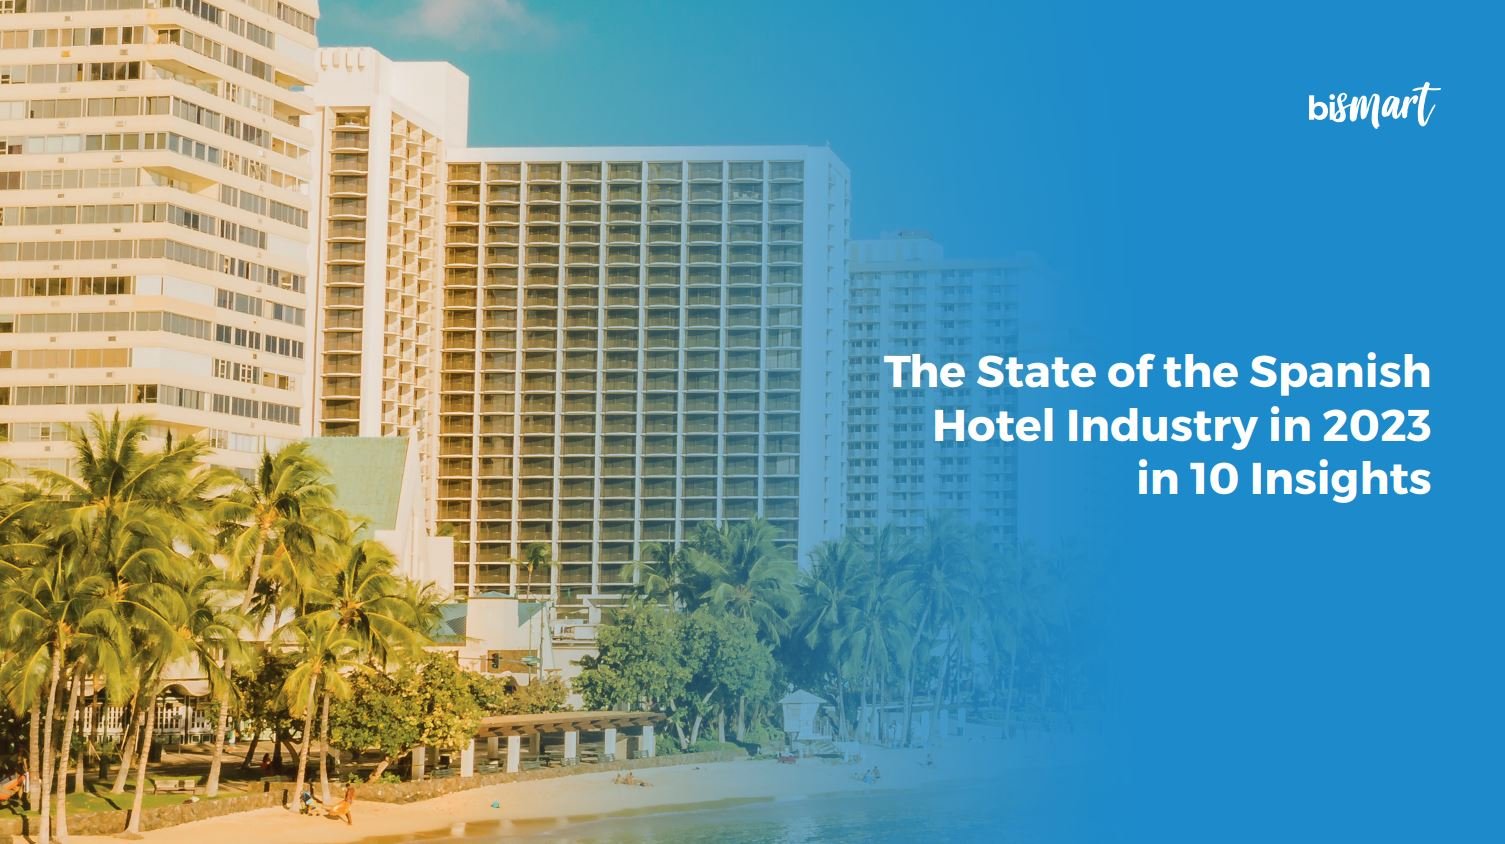 hotel industry in spain in 2023 in insights